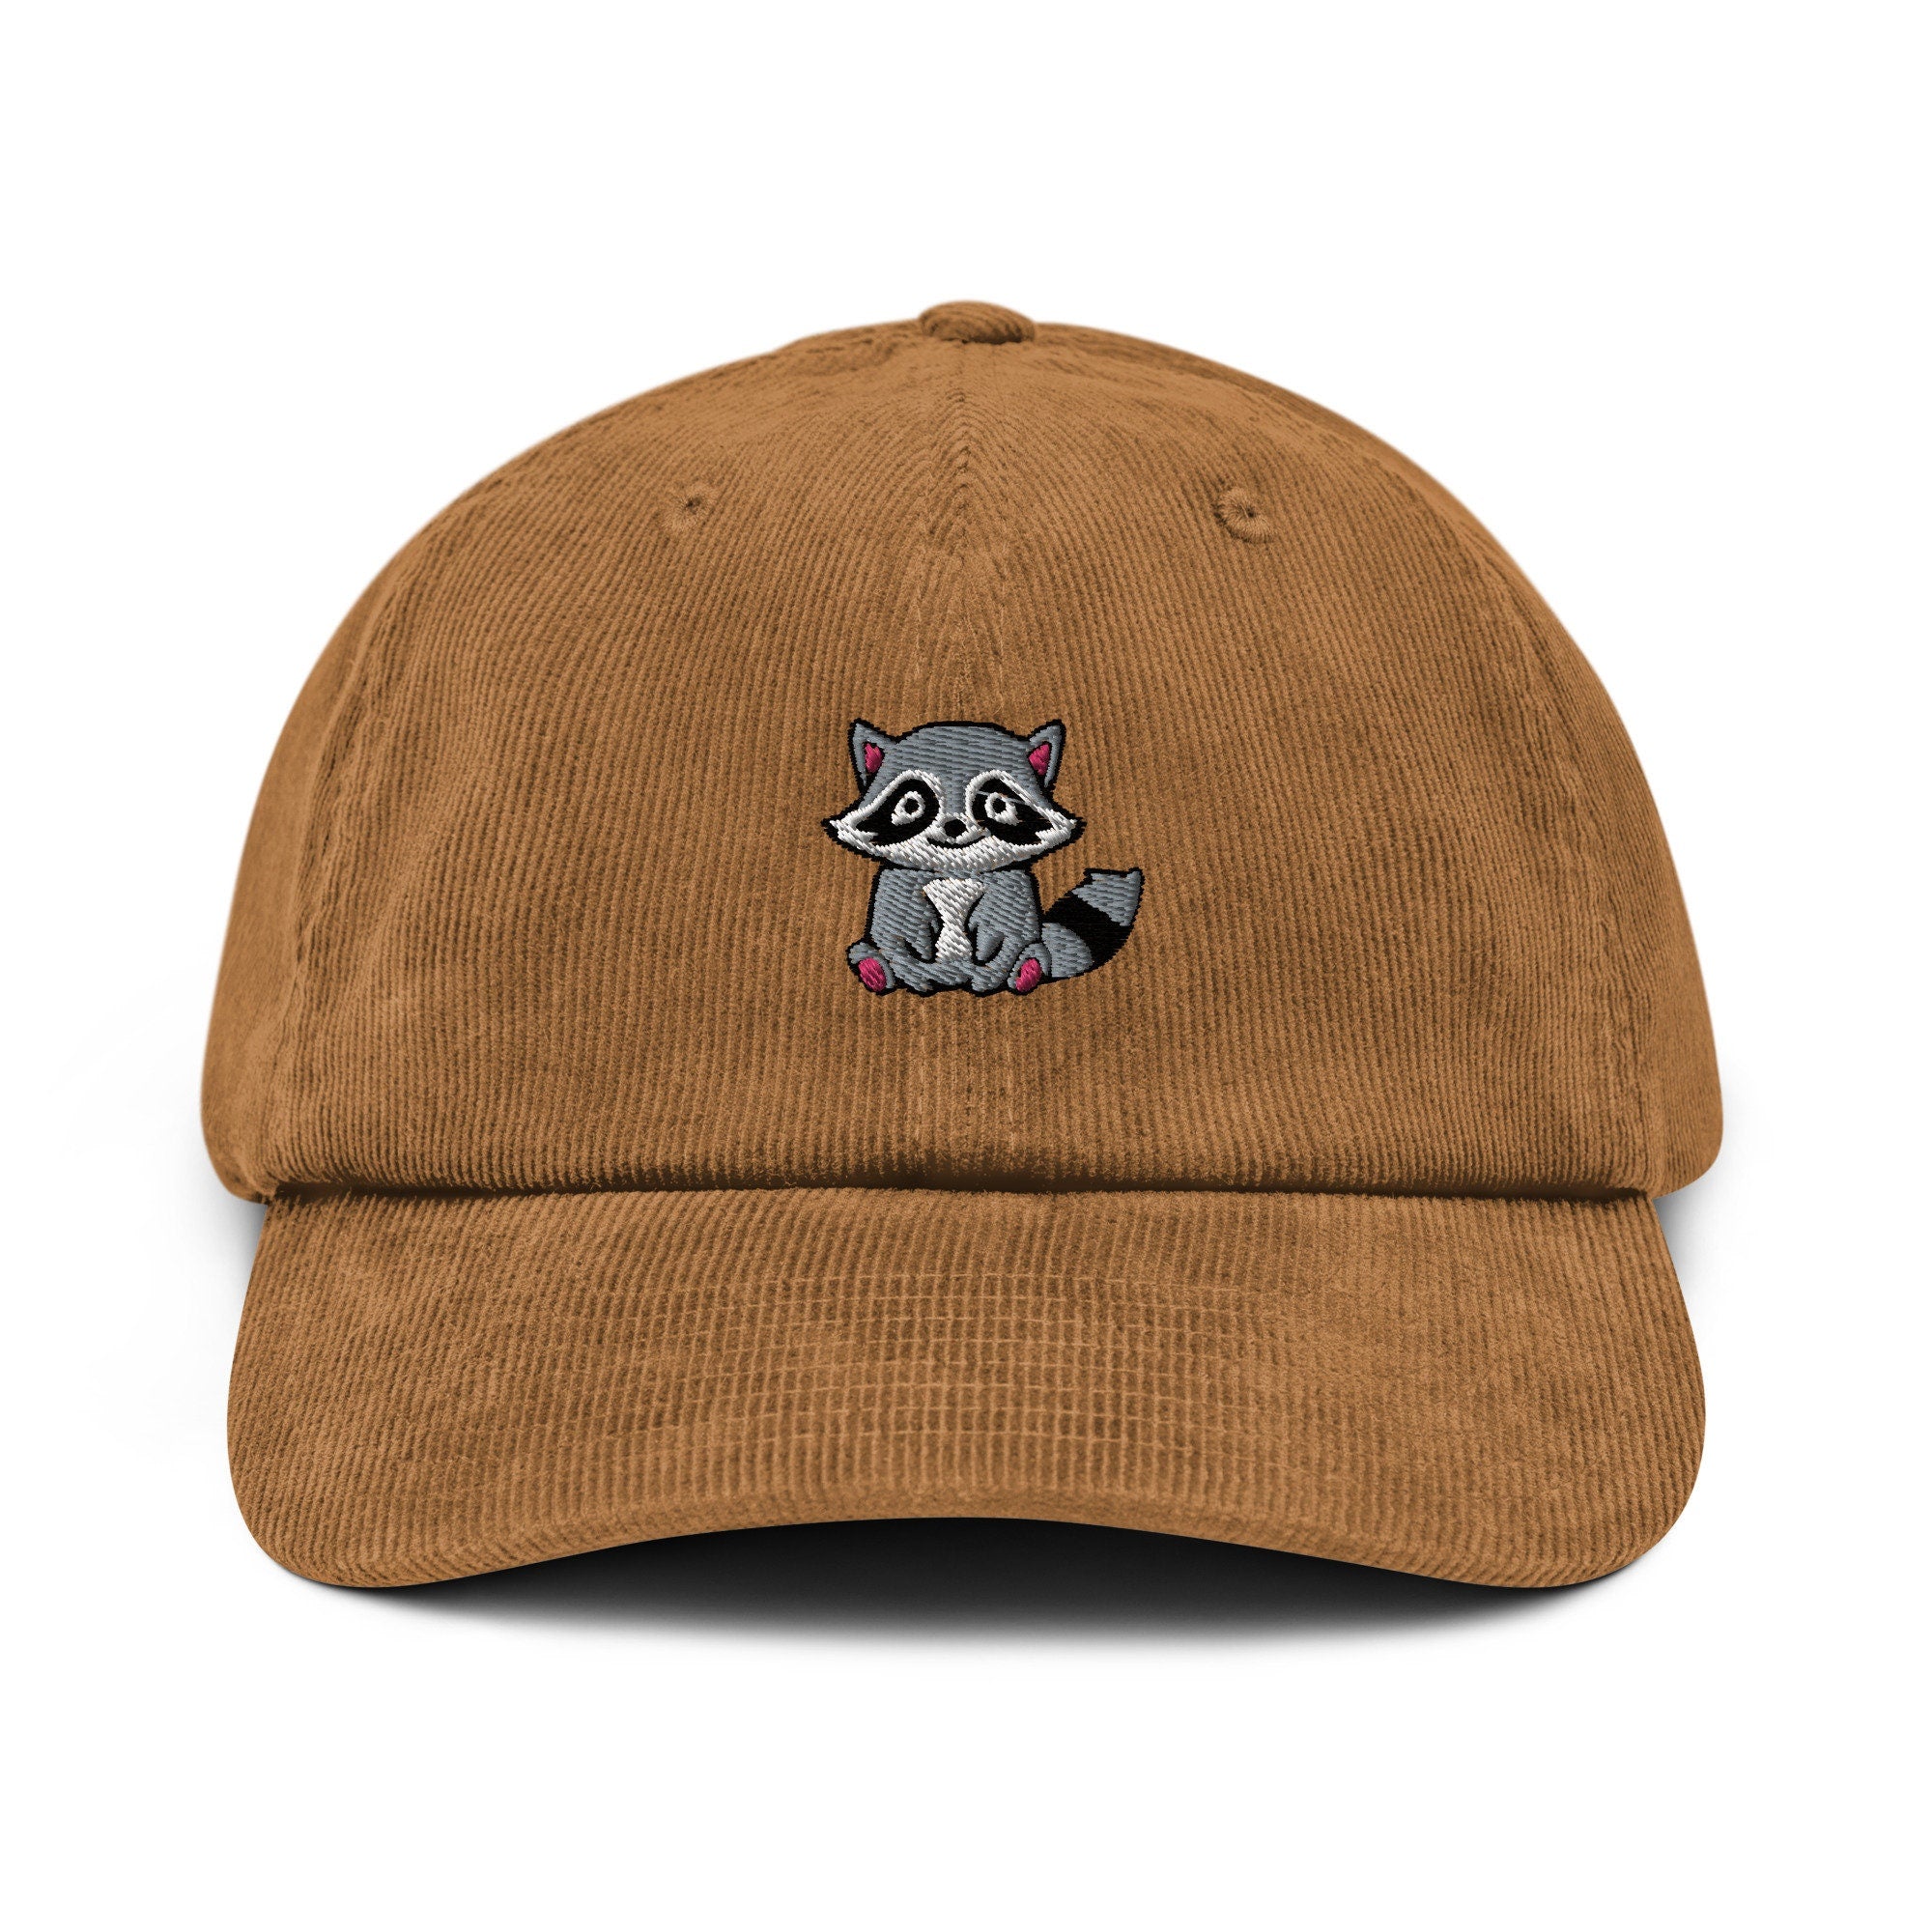 Raccoon Corduroy Hat, Handmade Embroidered Corduroy Dad Cap - Multiple Colors